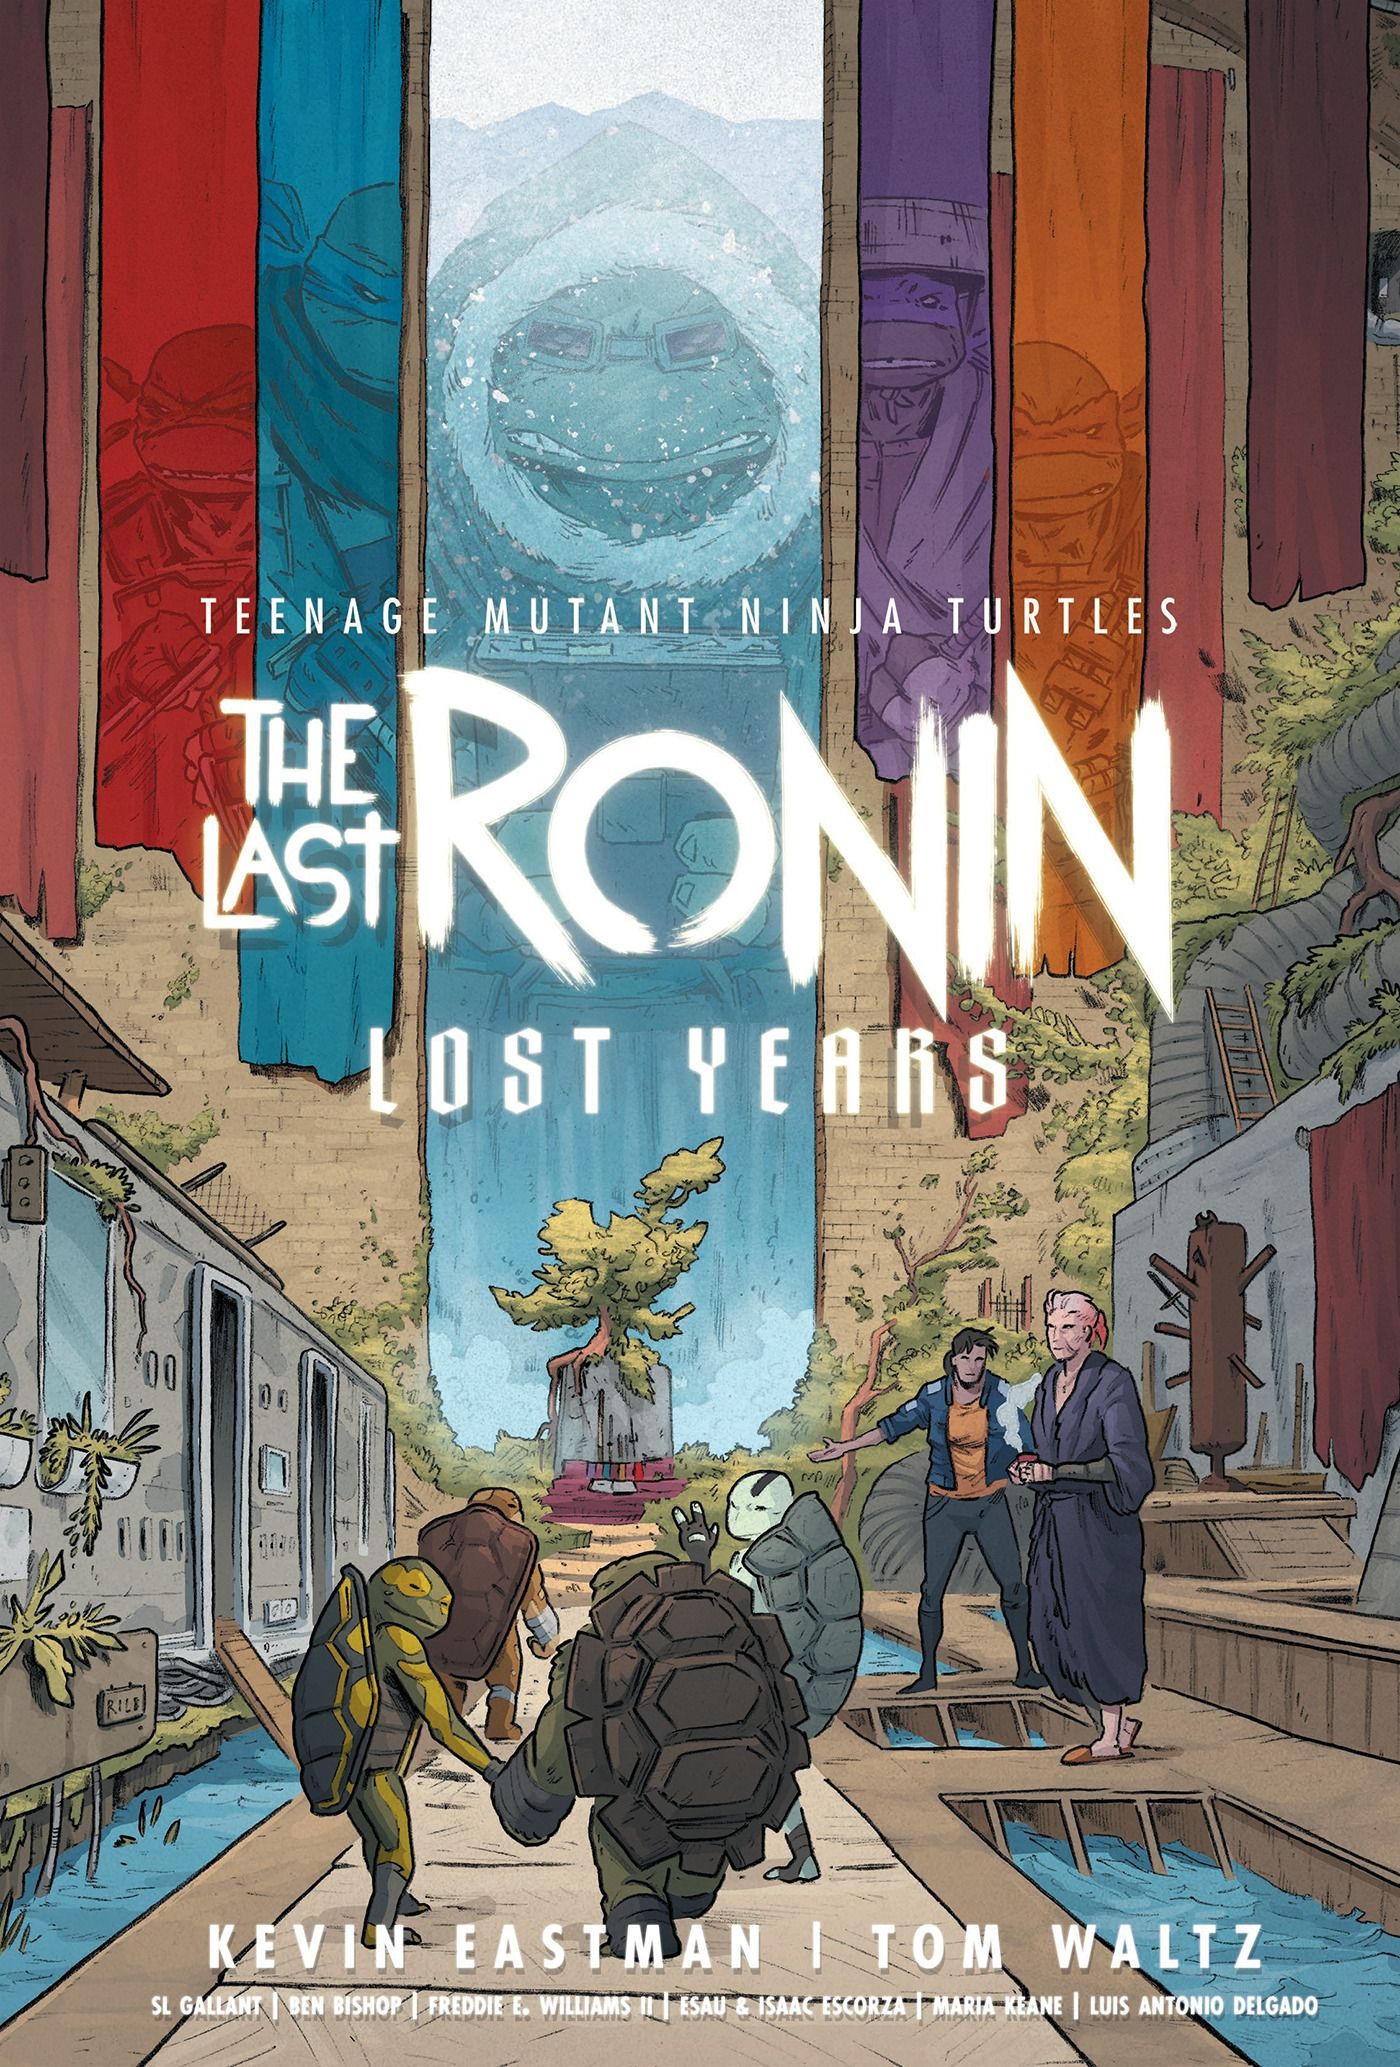 Teenage Mutant Ninja Turtles The Last Ronin - The Lost Years HC Cover